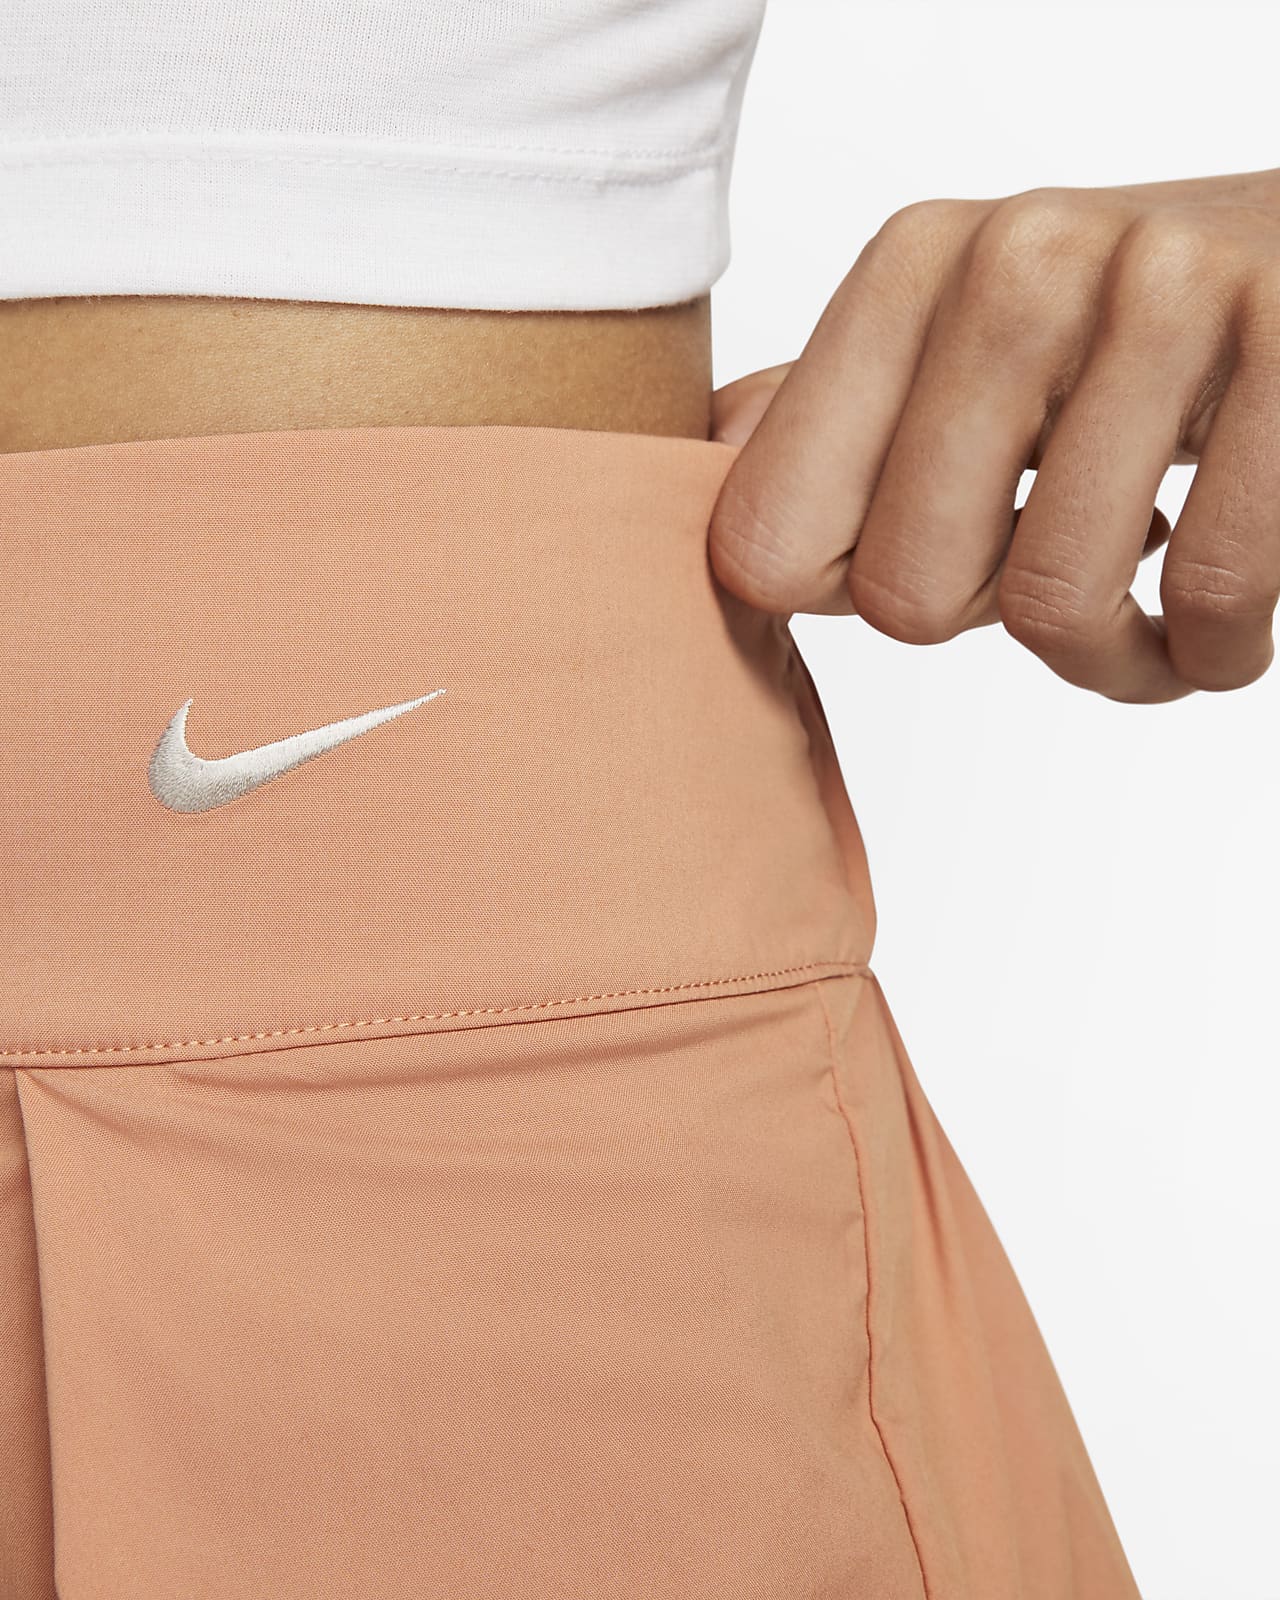 Nike Sportswear Collection Women\'s Trouser Shorts.